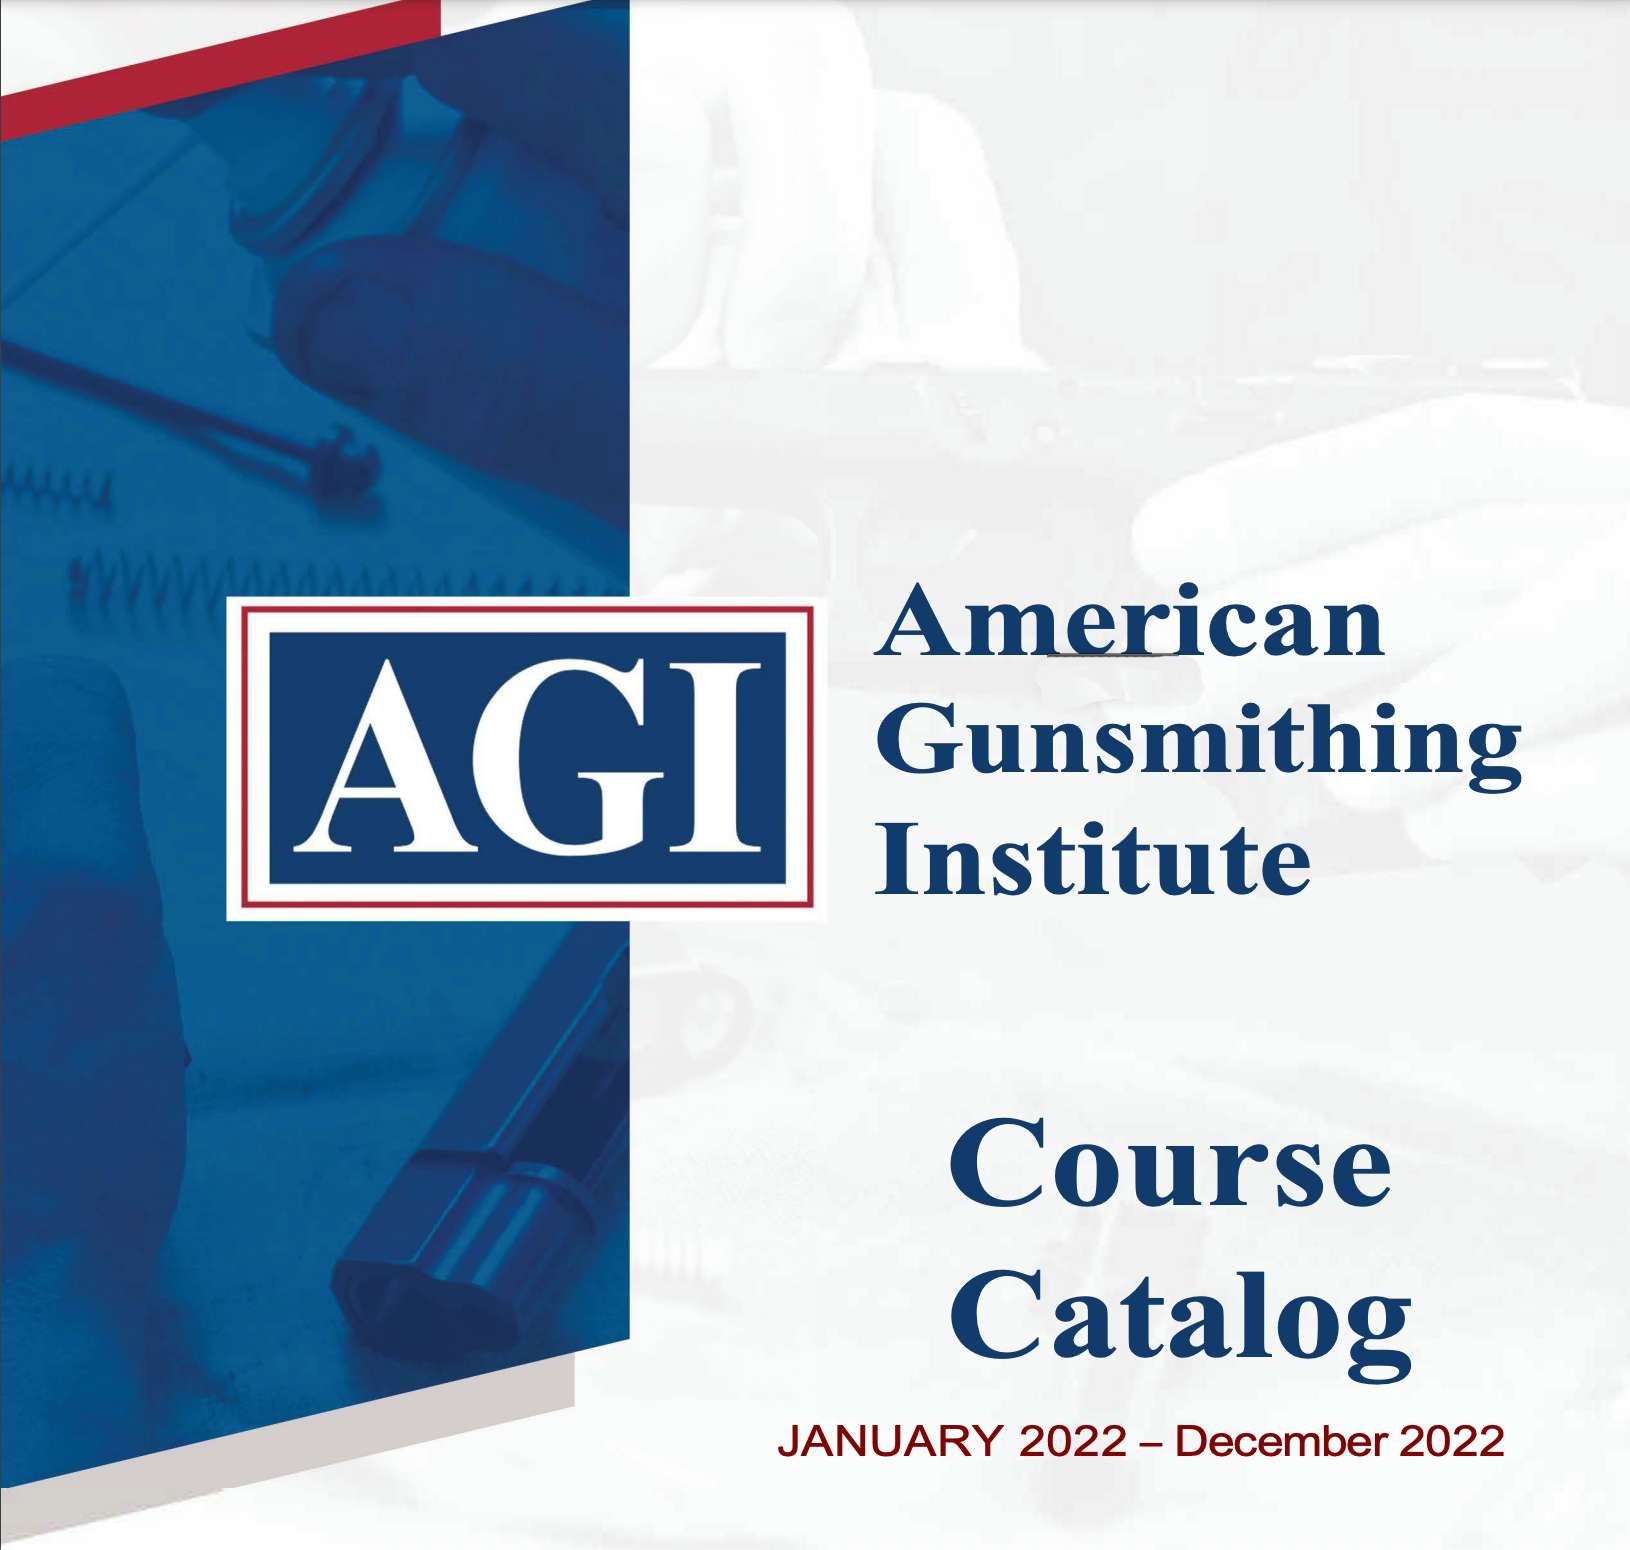 AGI-GUNSMITH CATALOG COVER